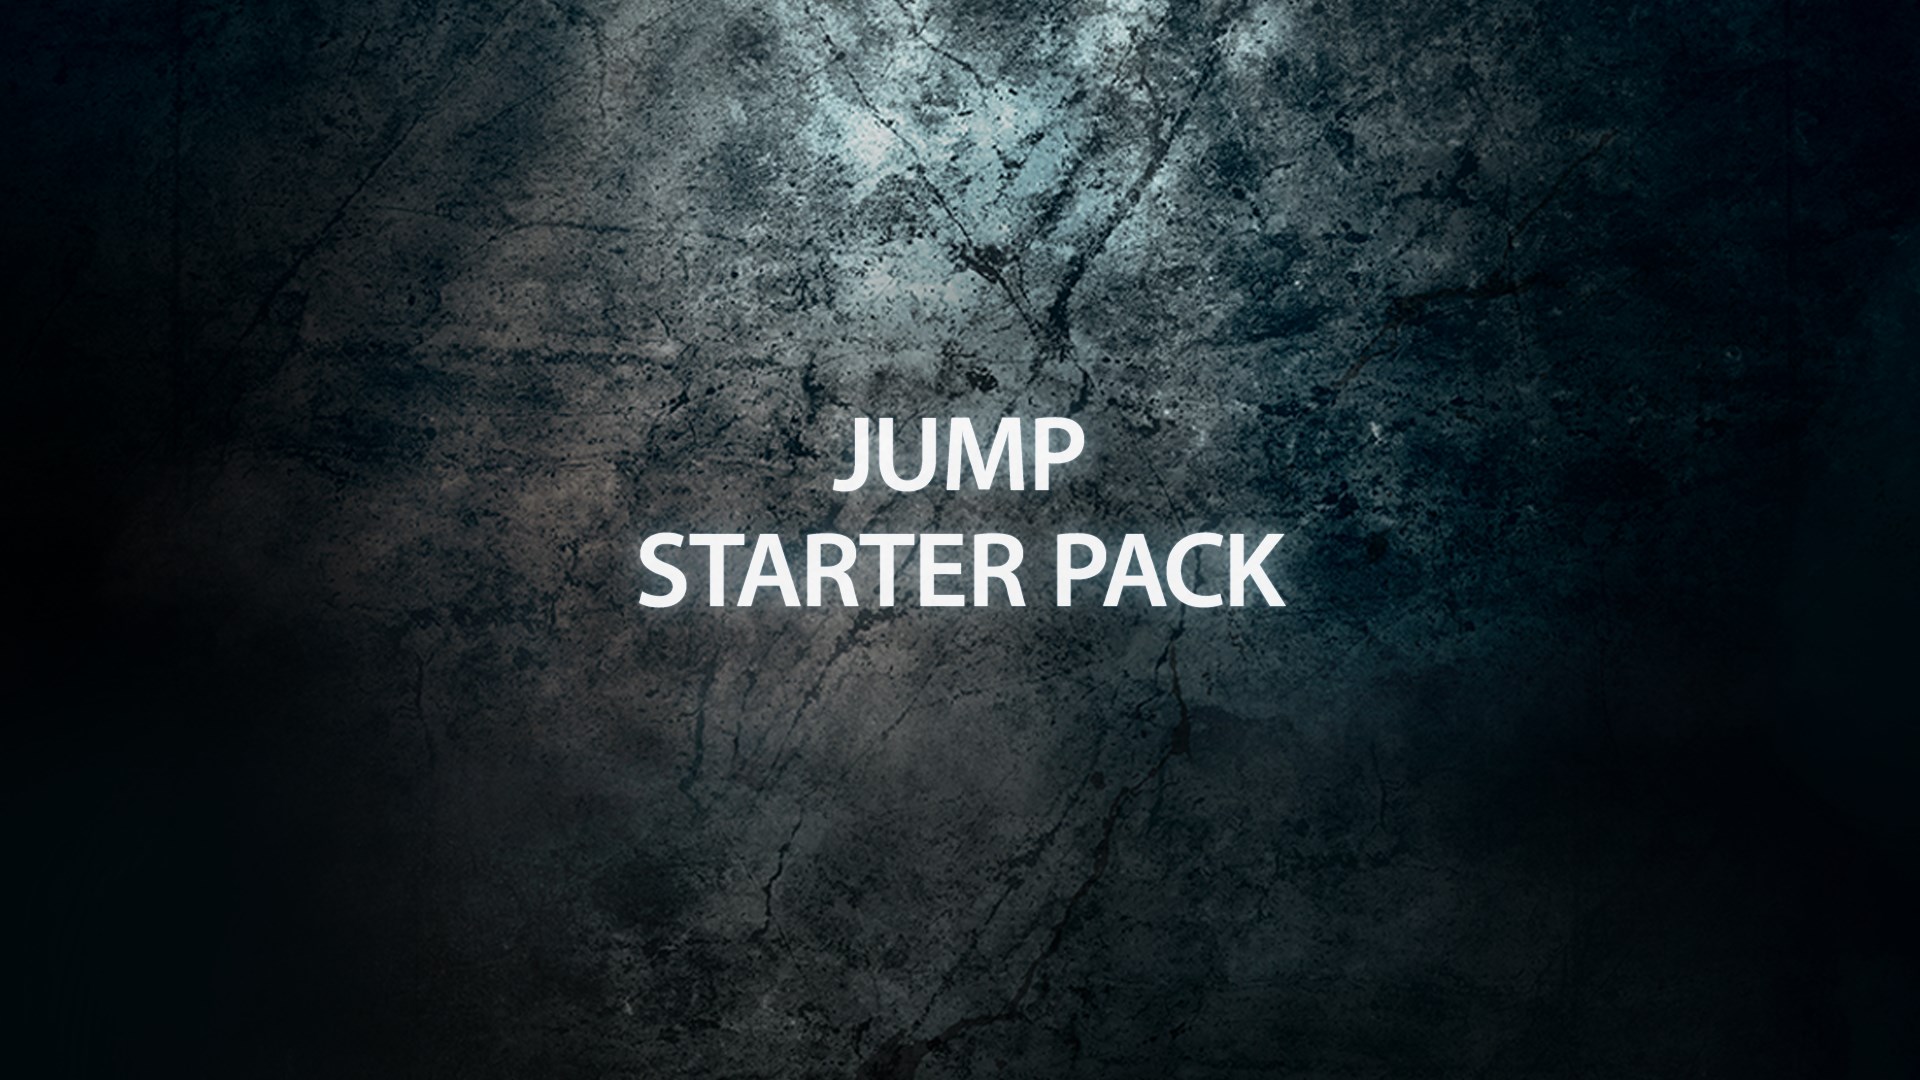 jump force desktop theme pack